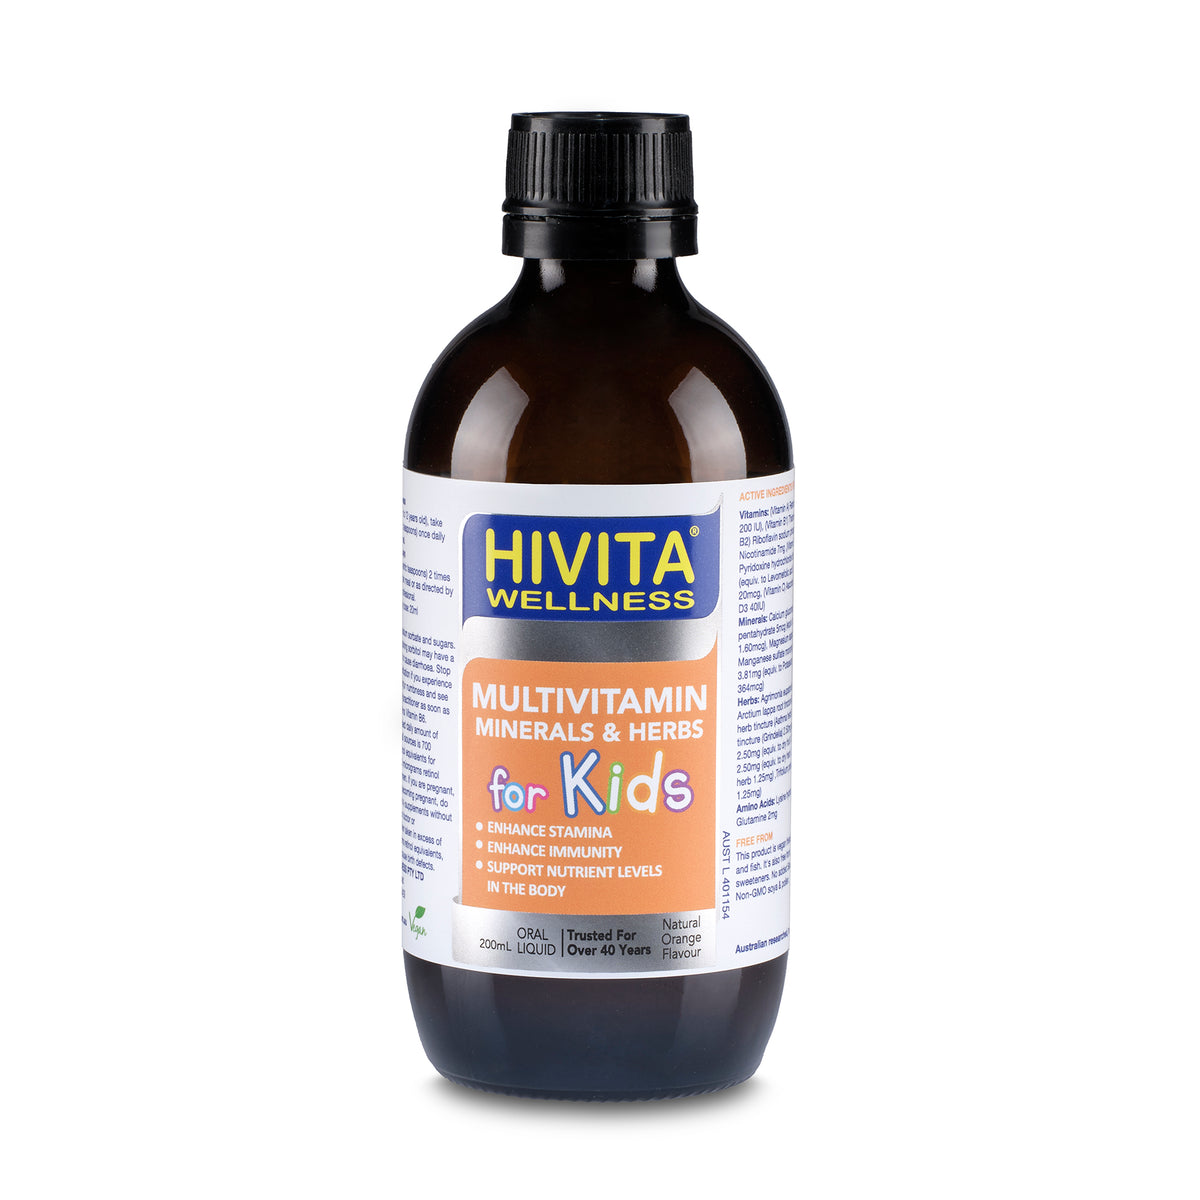 Hivita Multivitamin Minerals and Herbs for Kids